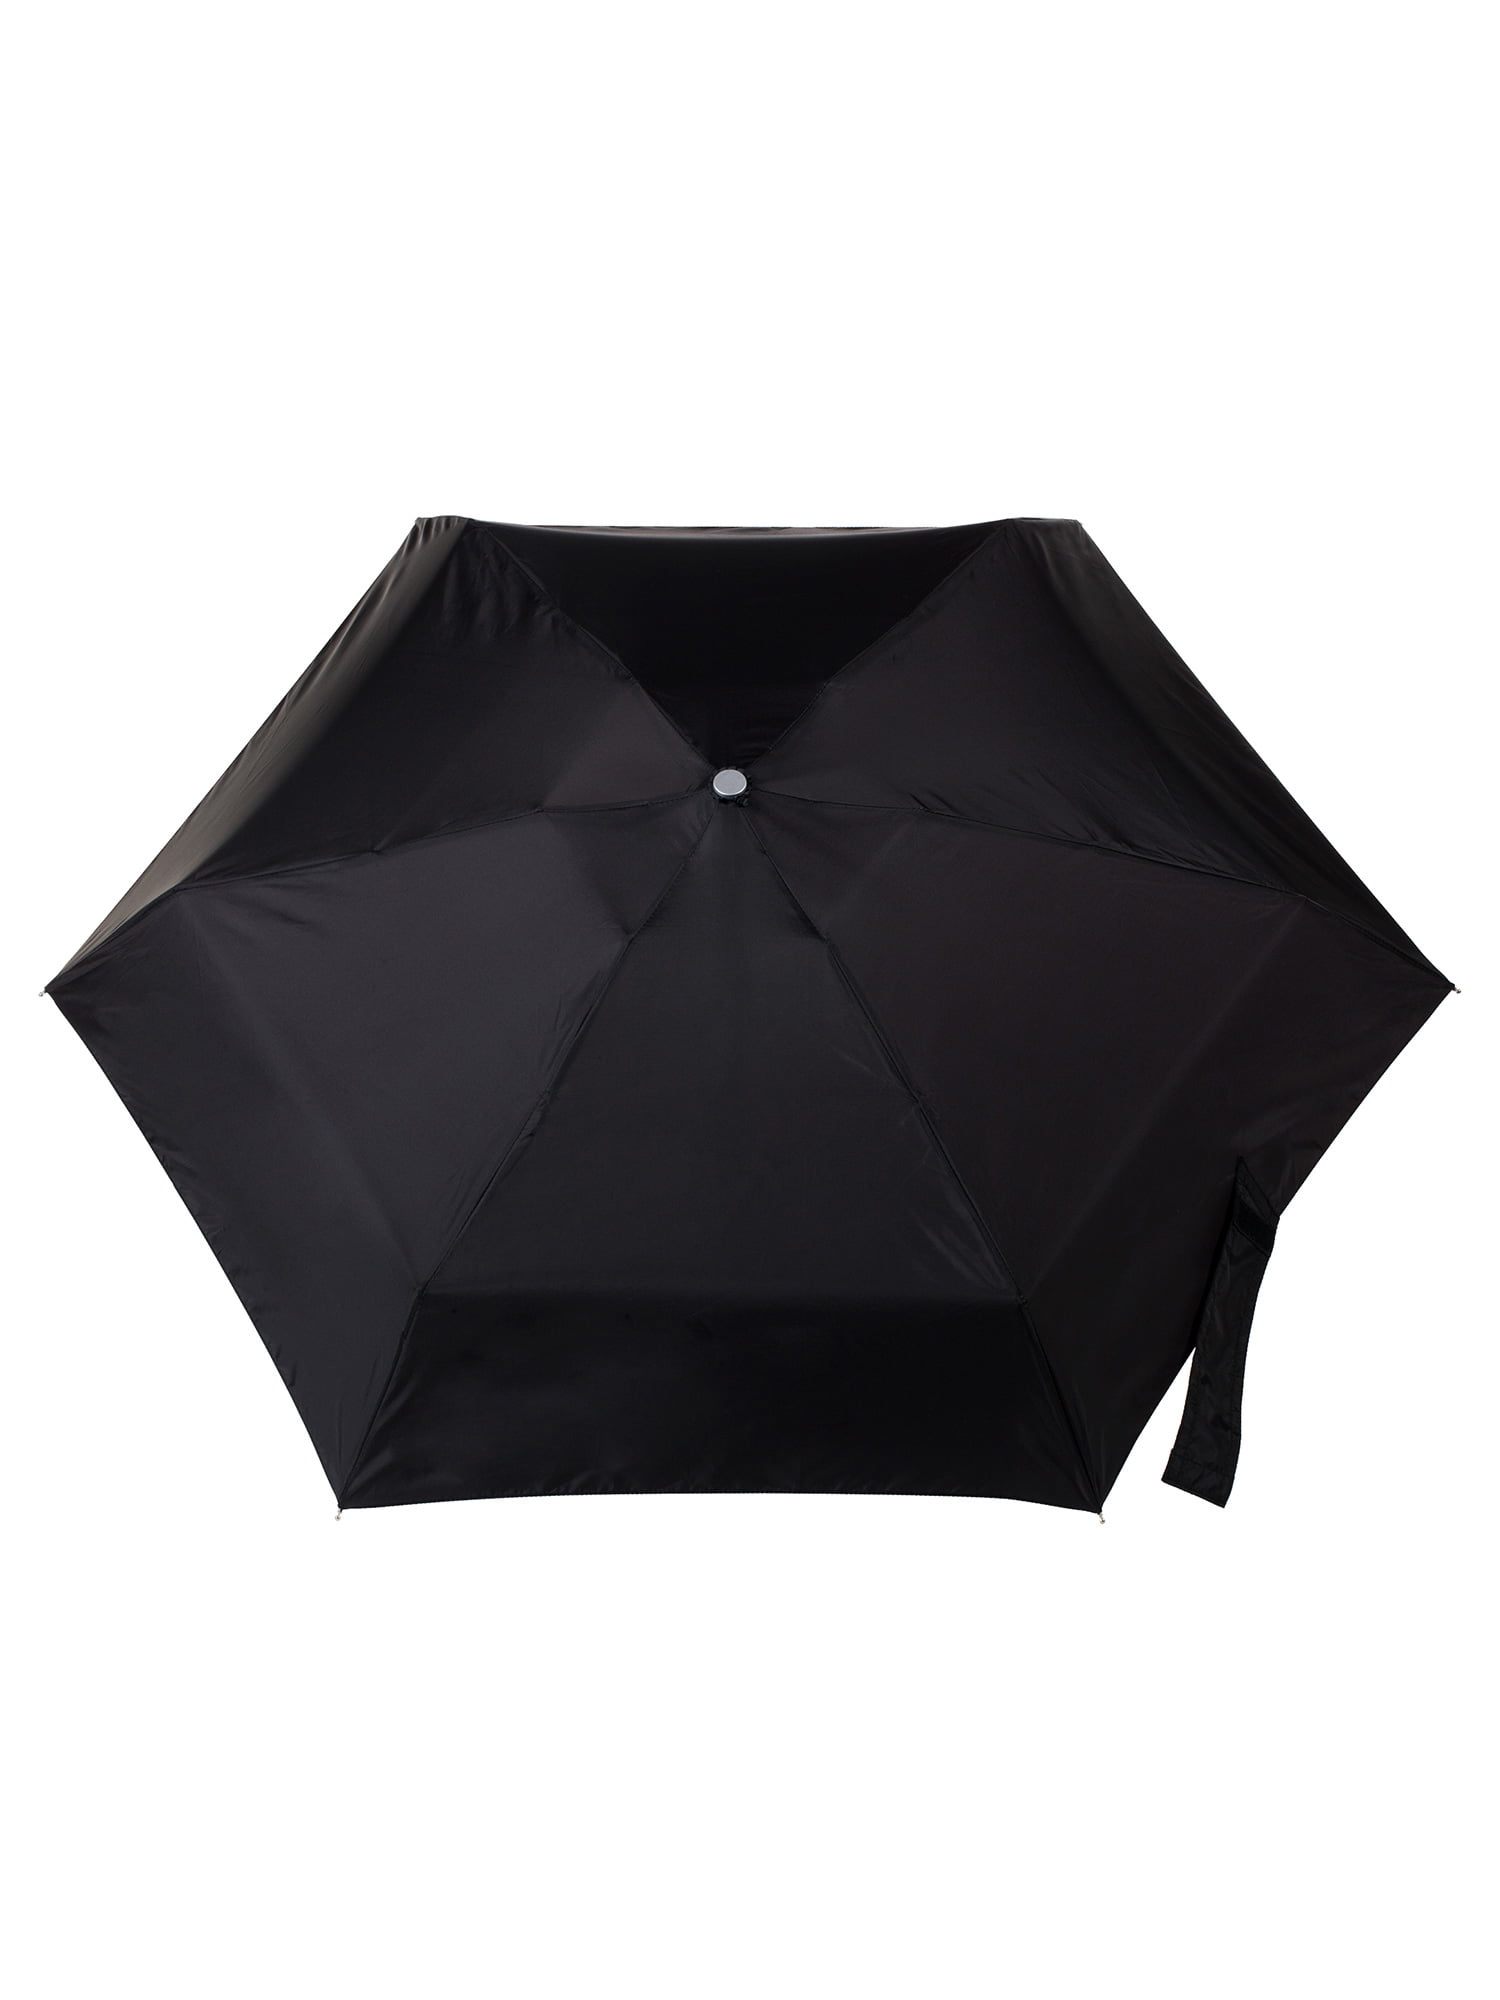 Betz Pocket Umbrella Umbrella with Soft Touch Handle Folding Umbrella & Automatic 